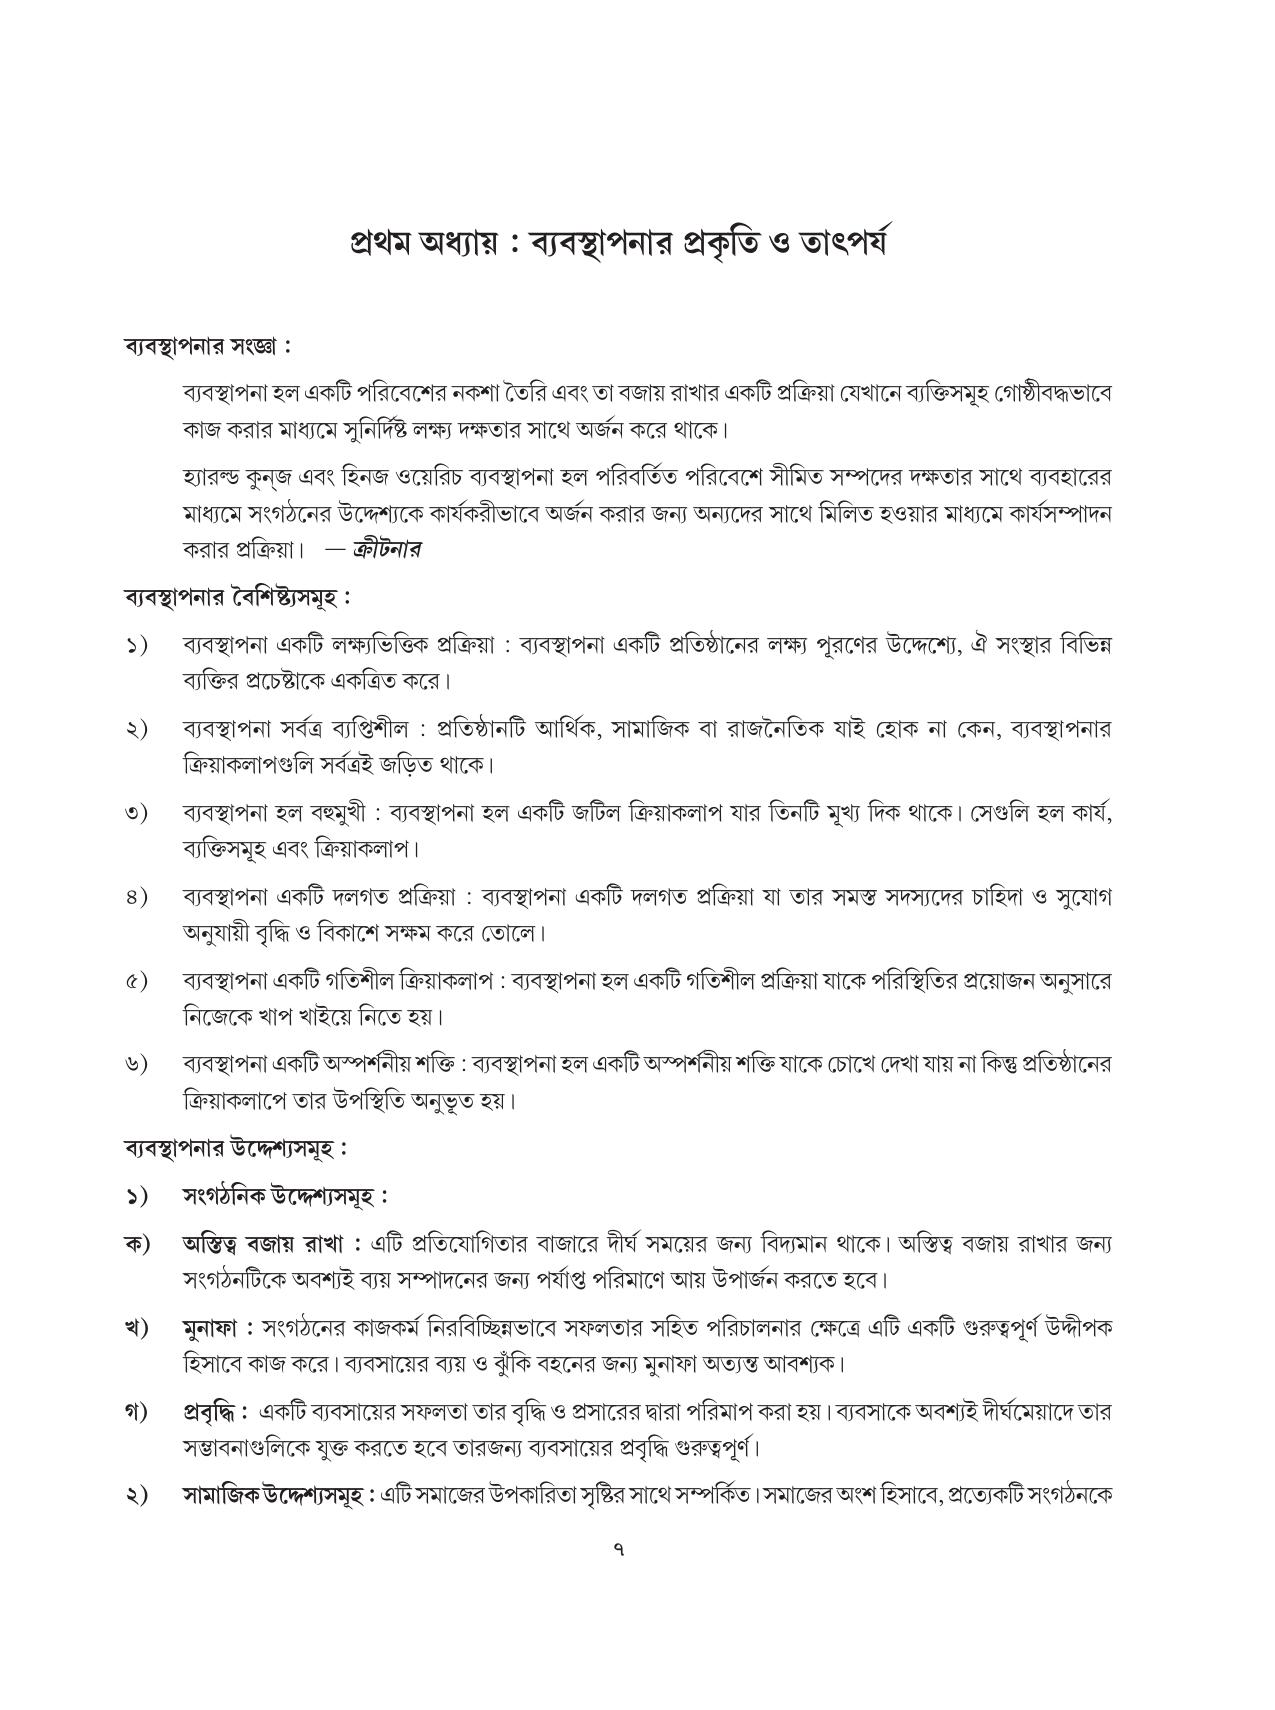 Tripura Board Class 12 Karbari Shastra Bengali Version Workbooks - Page 7